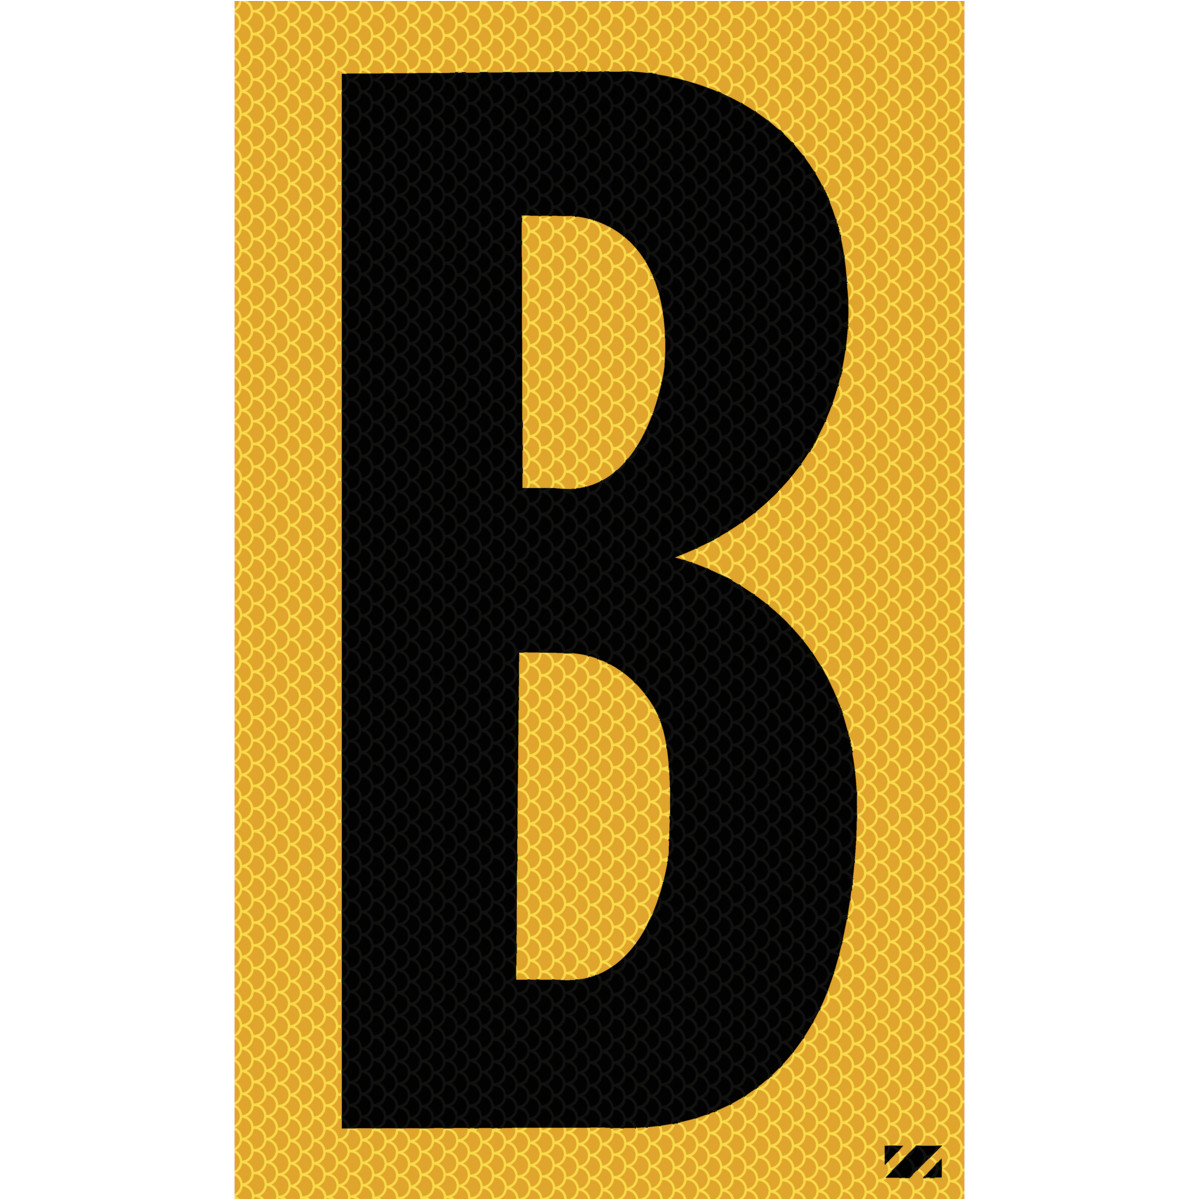 2.5" Black on Yellow High Intensity Reflective "B"